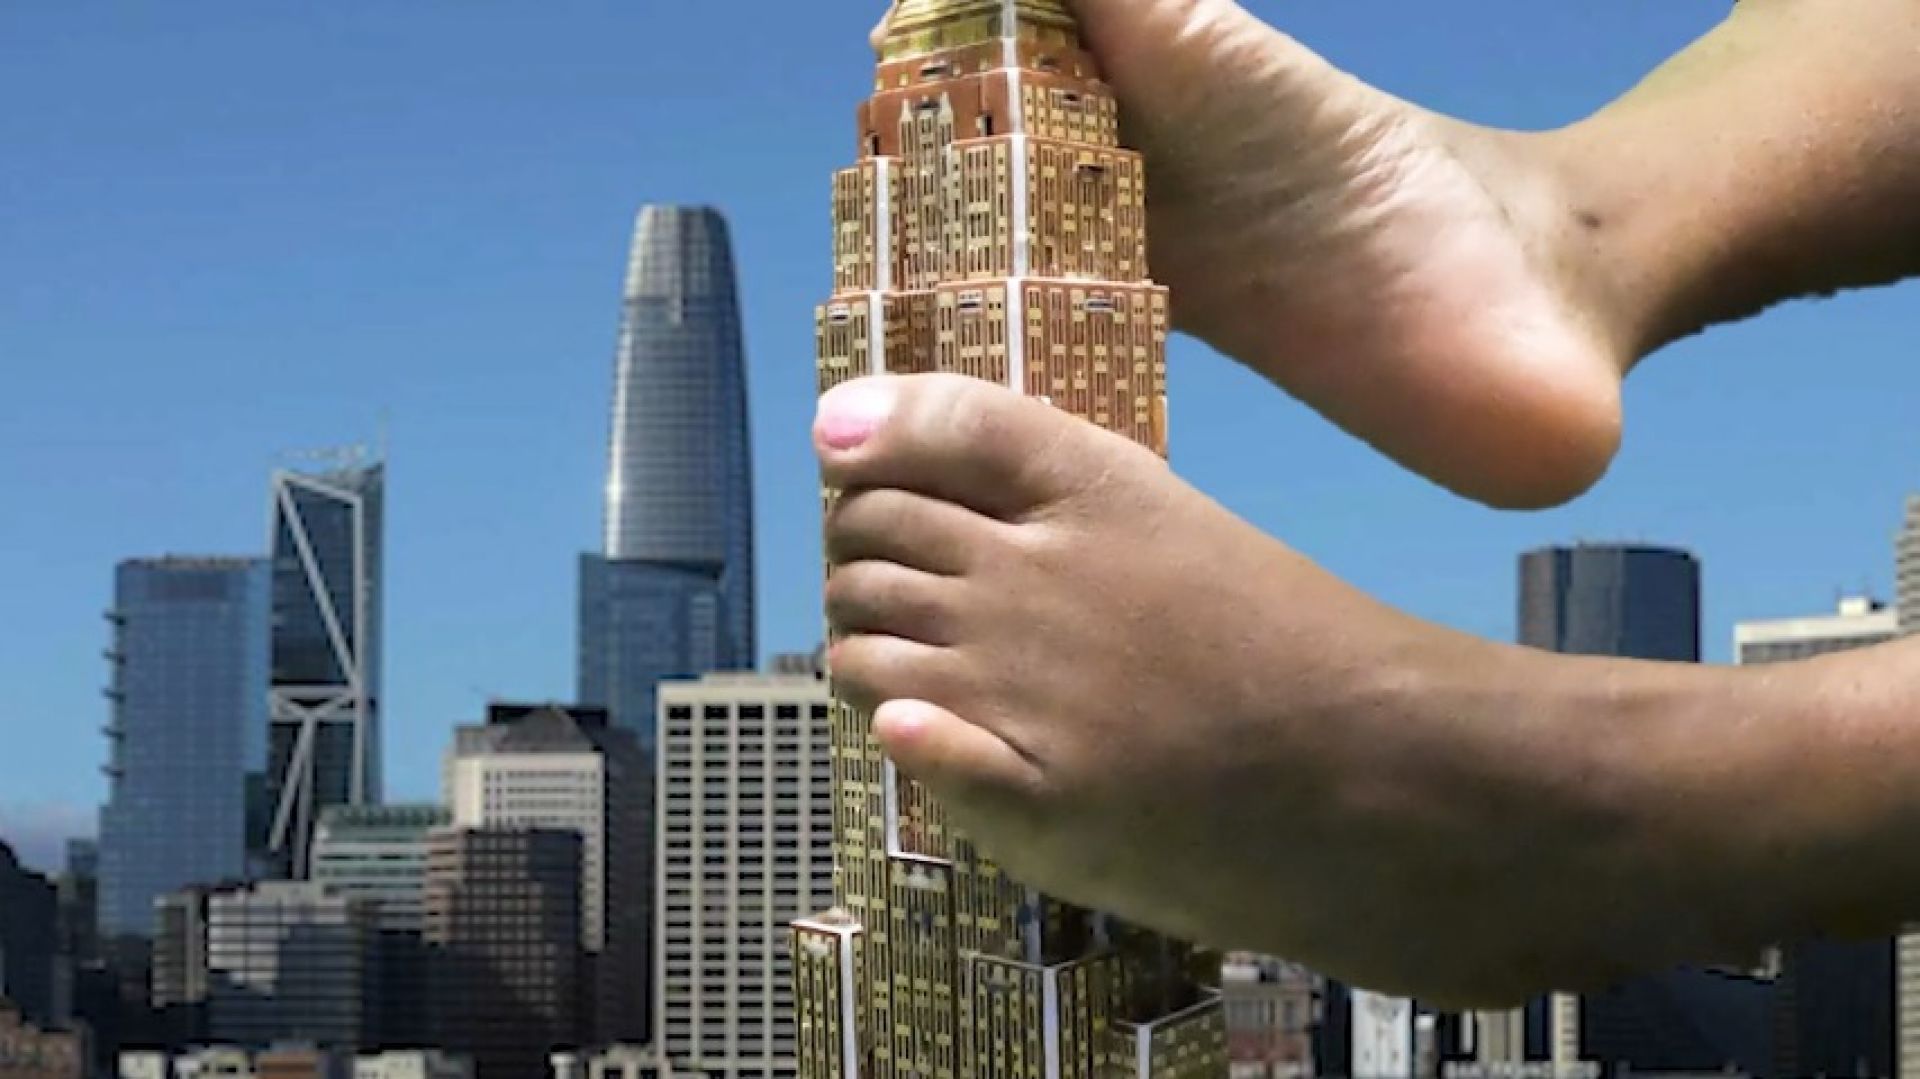 giantess give building foot job